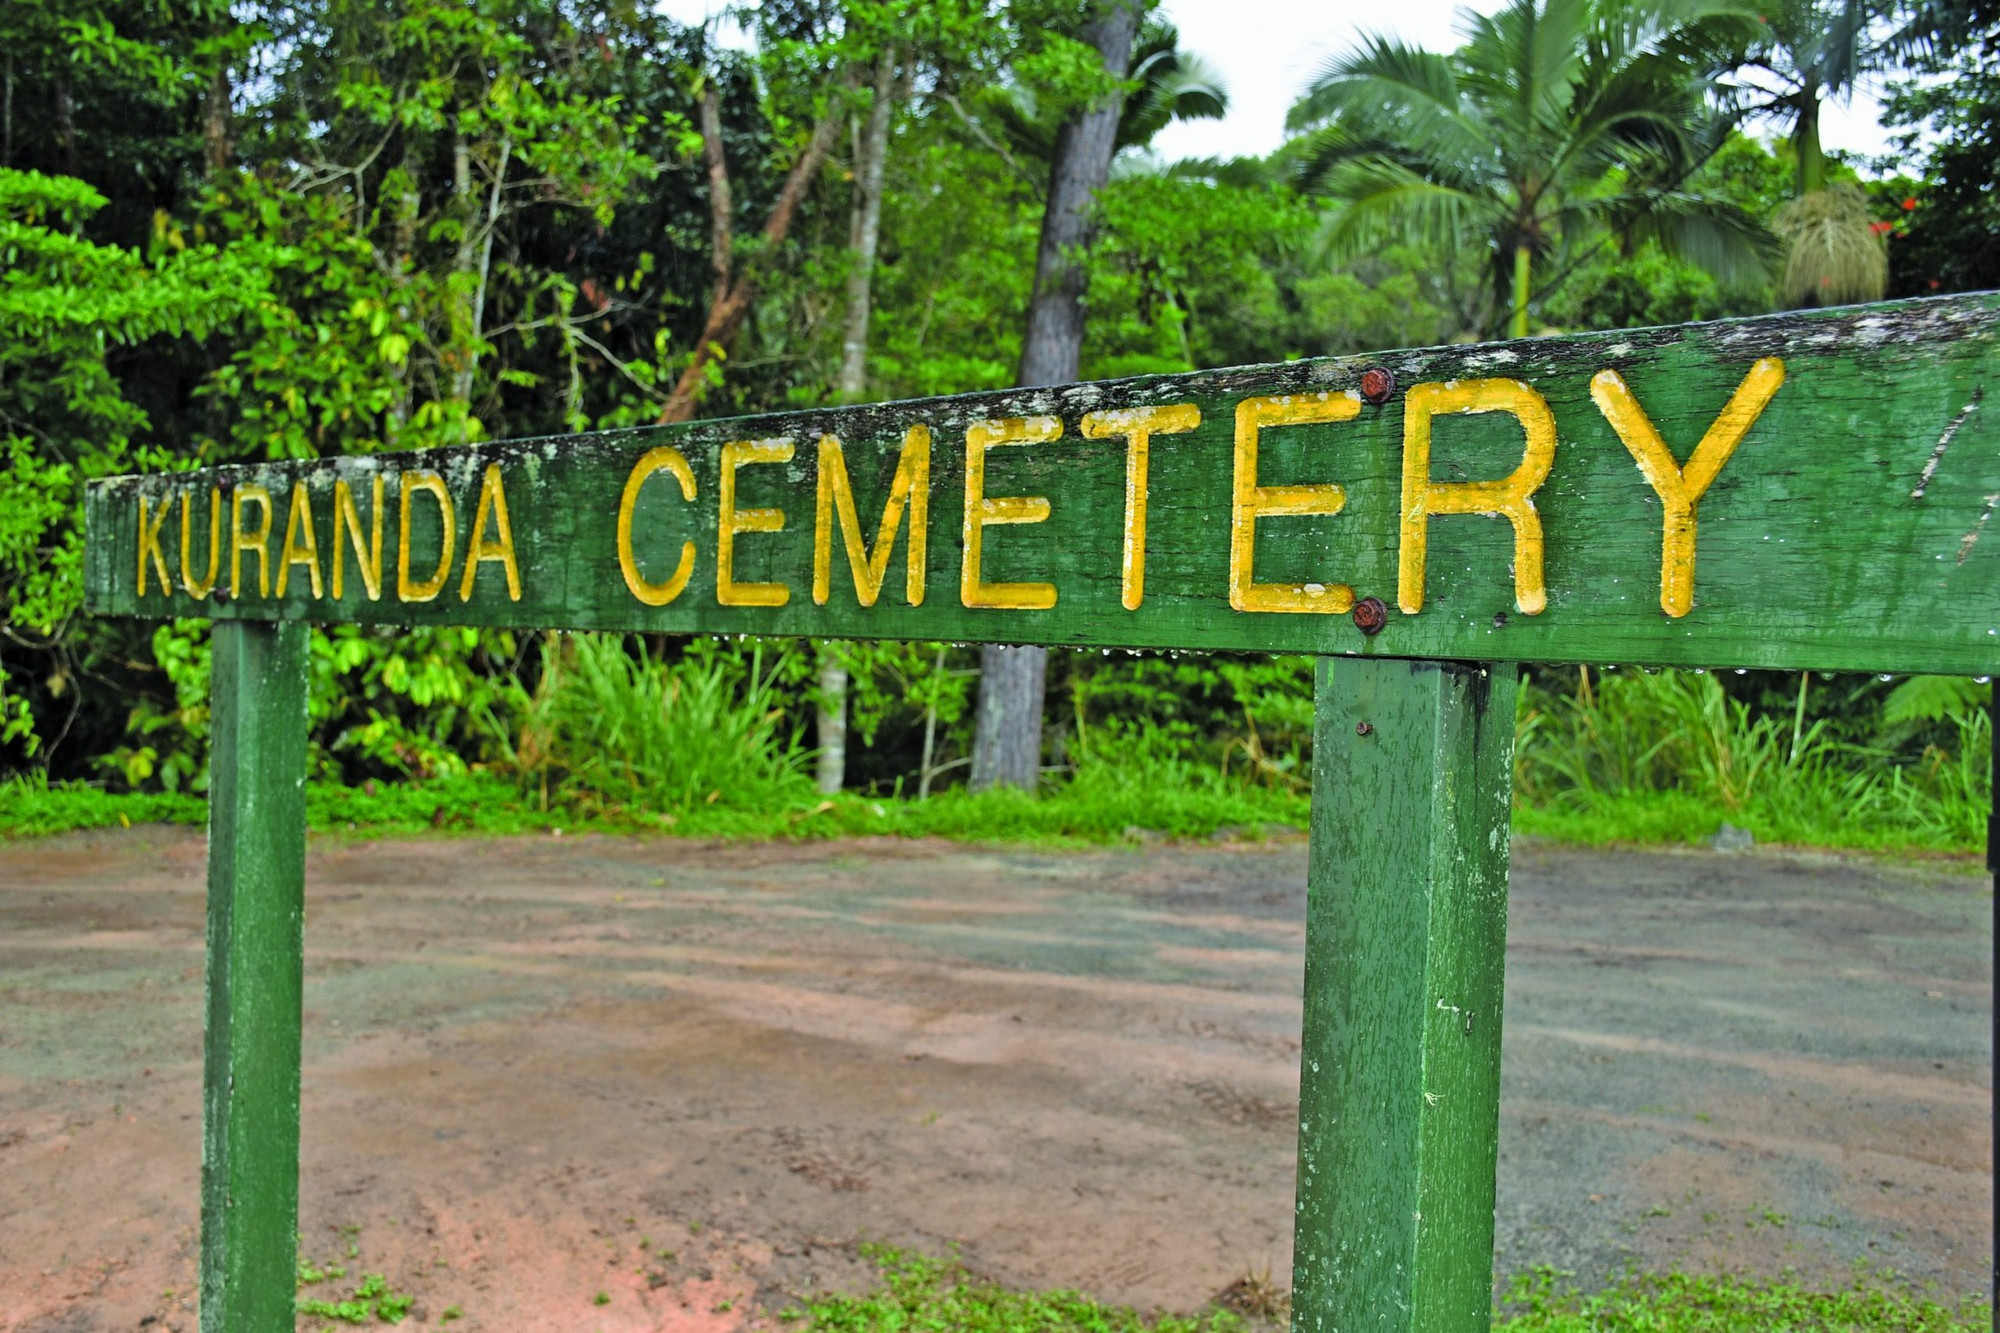 New name for Kuranda cemetery - feature photo